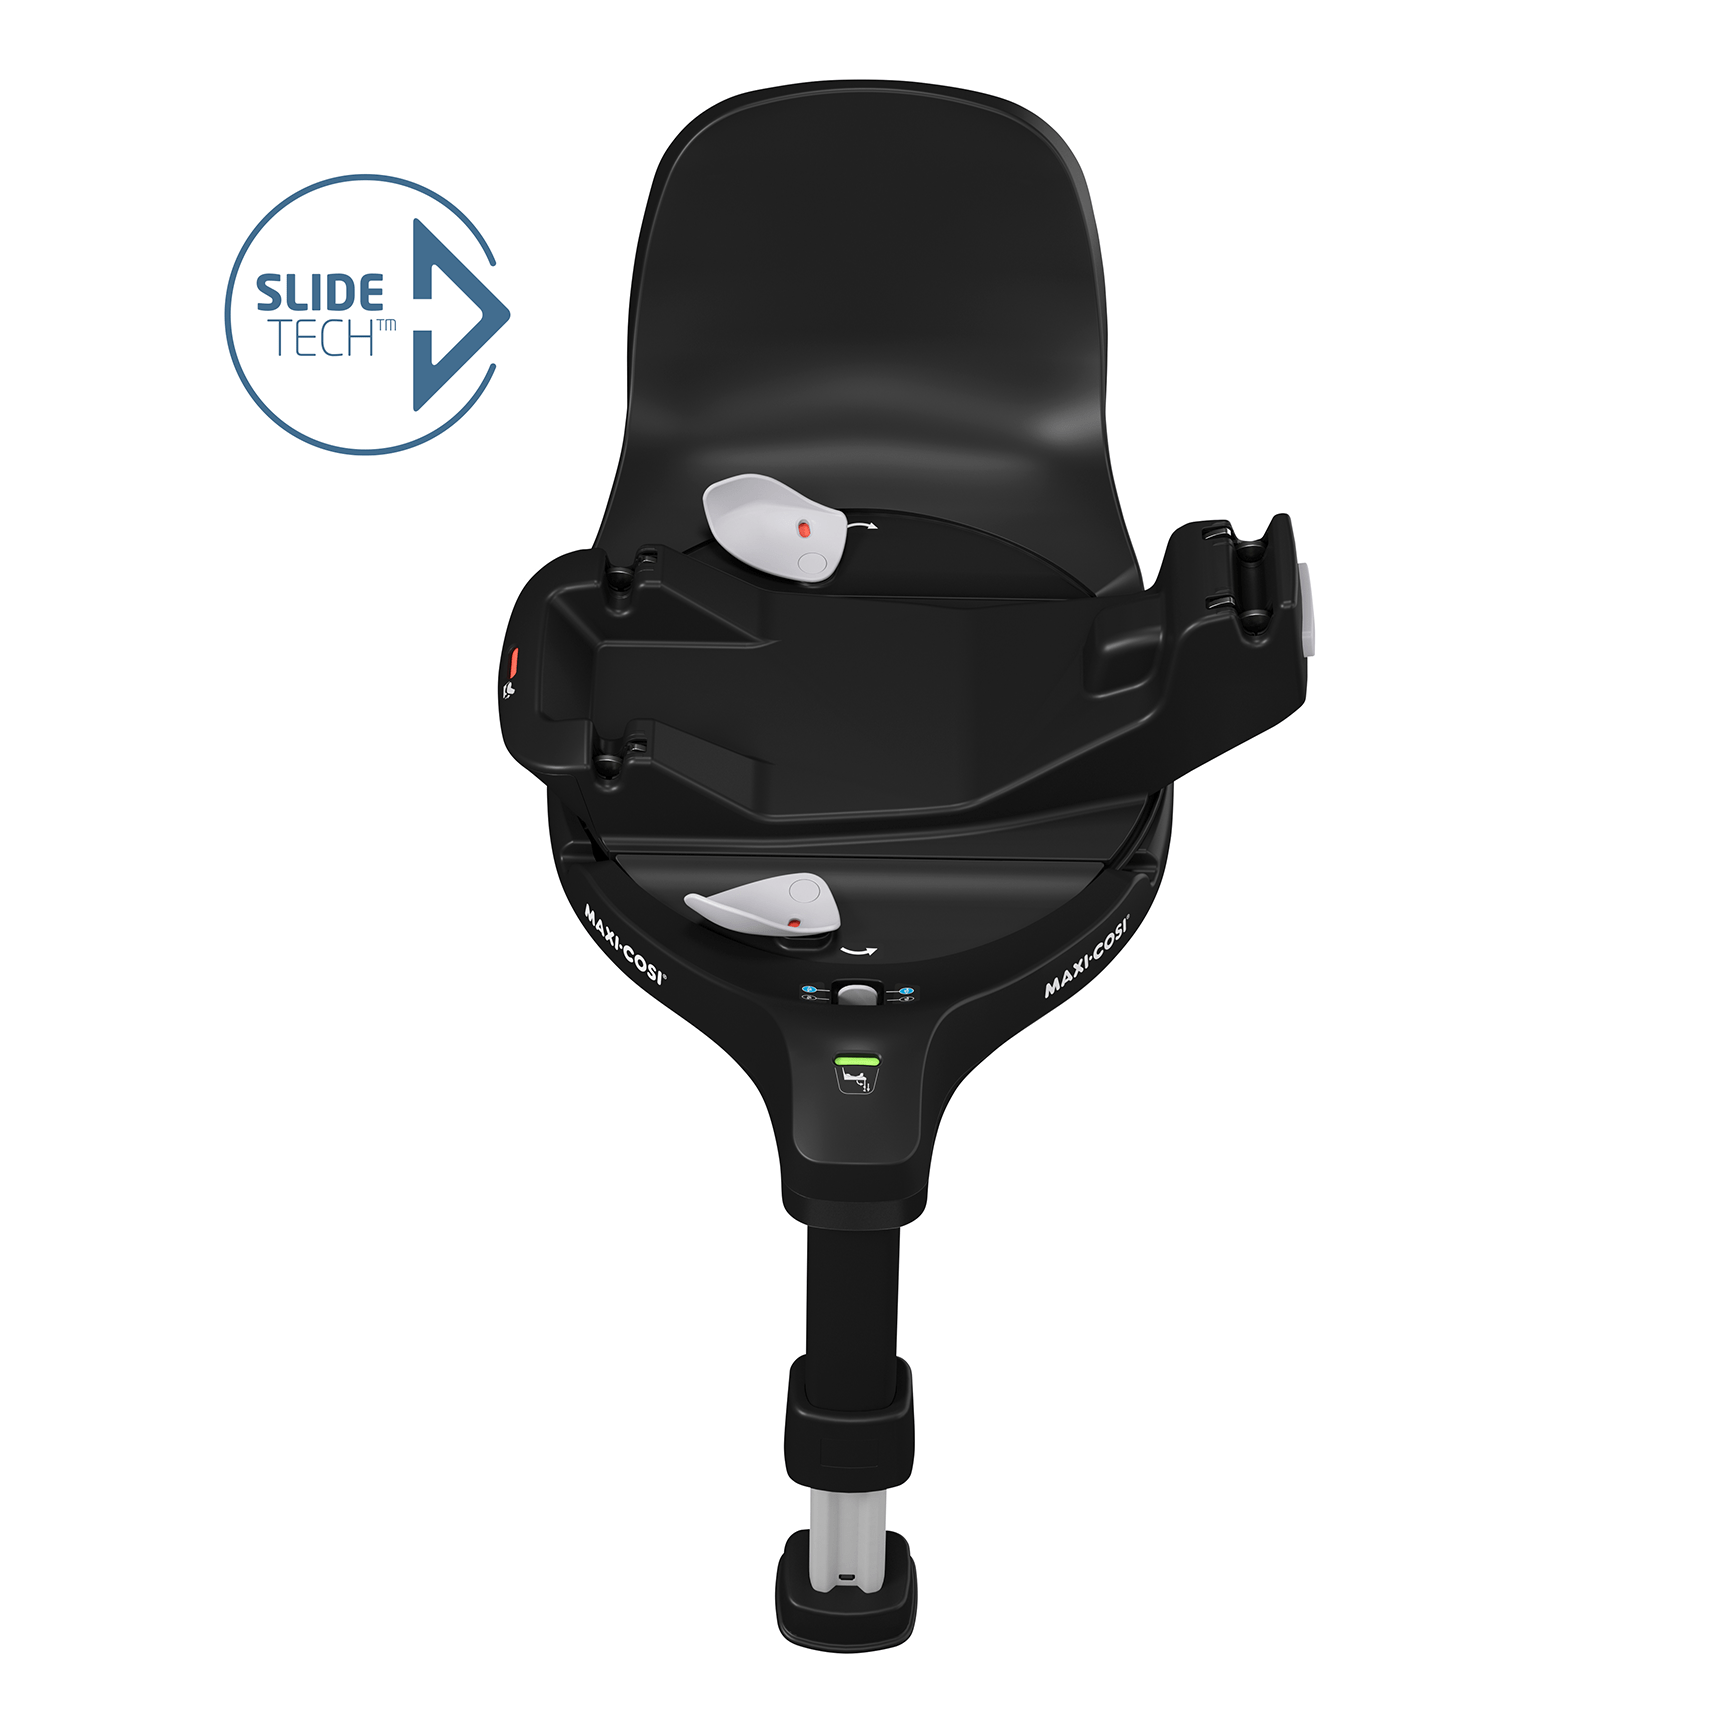 Maxi-Cosi baby car seats Maxi-Cosi 360 Family Pro Bundle - Essential Black KF54400000